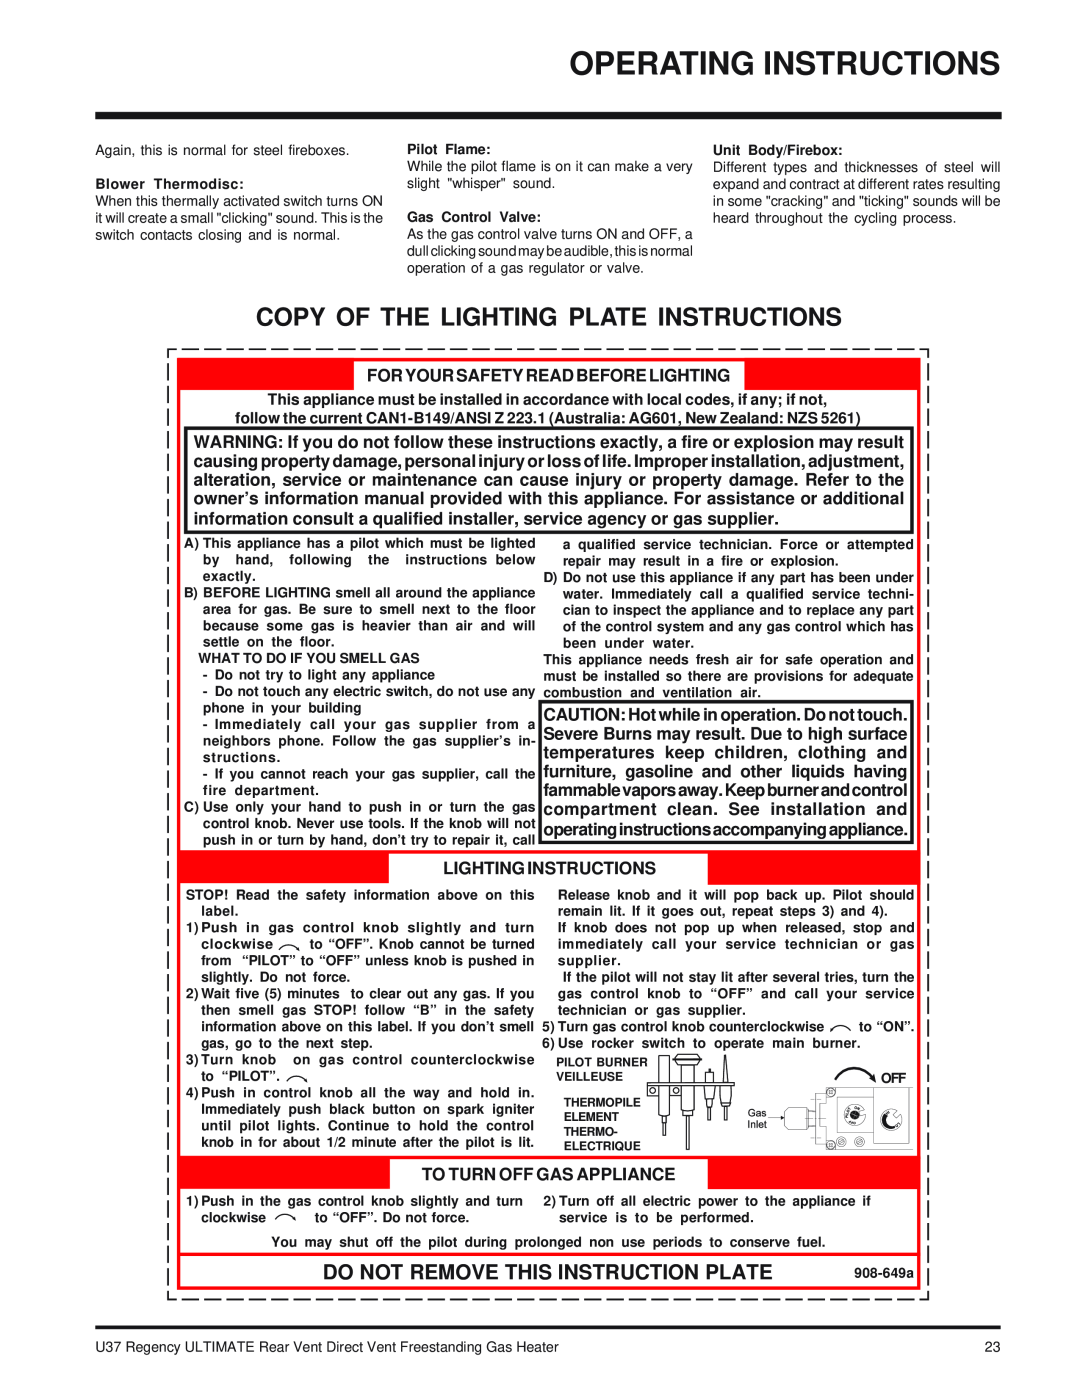 Regency U37-NG NATURAL GAS, U37-LP PROPANE Operating Instructions, Copy Of The Lighting Plate Instructions 